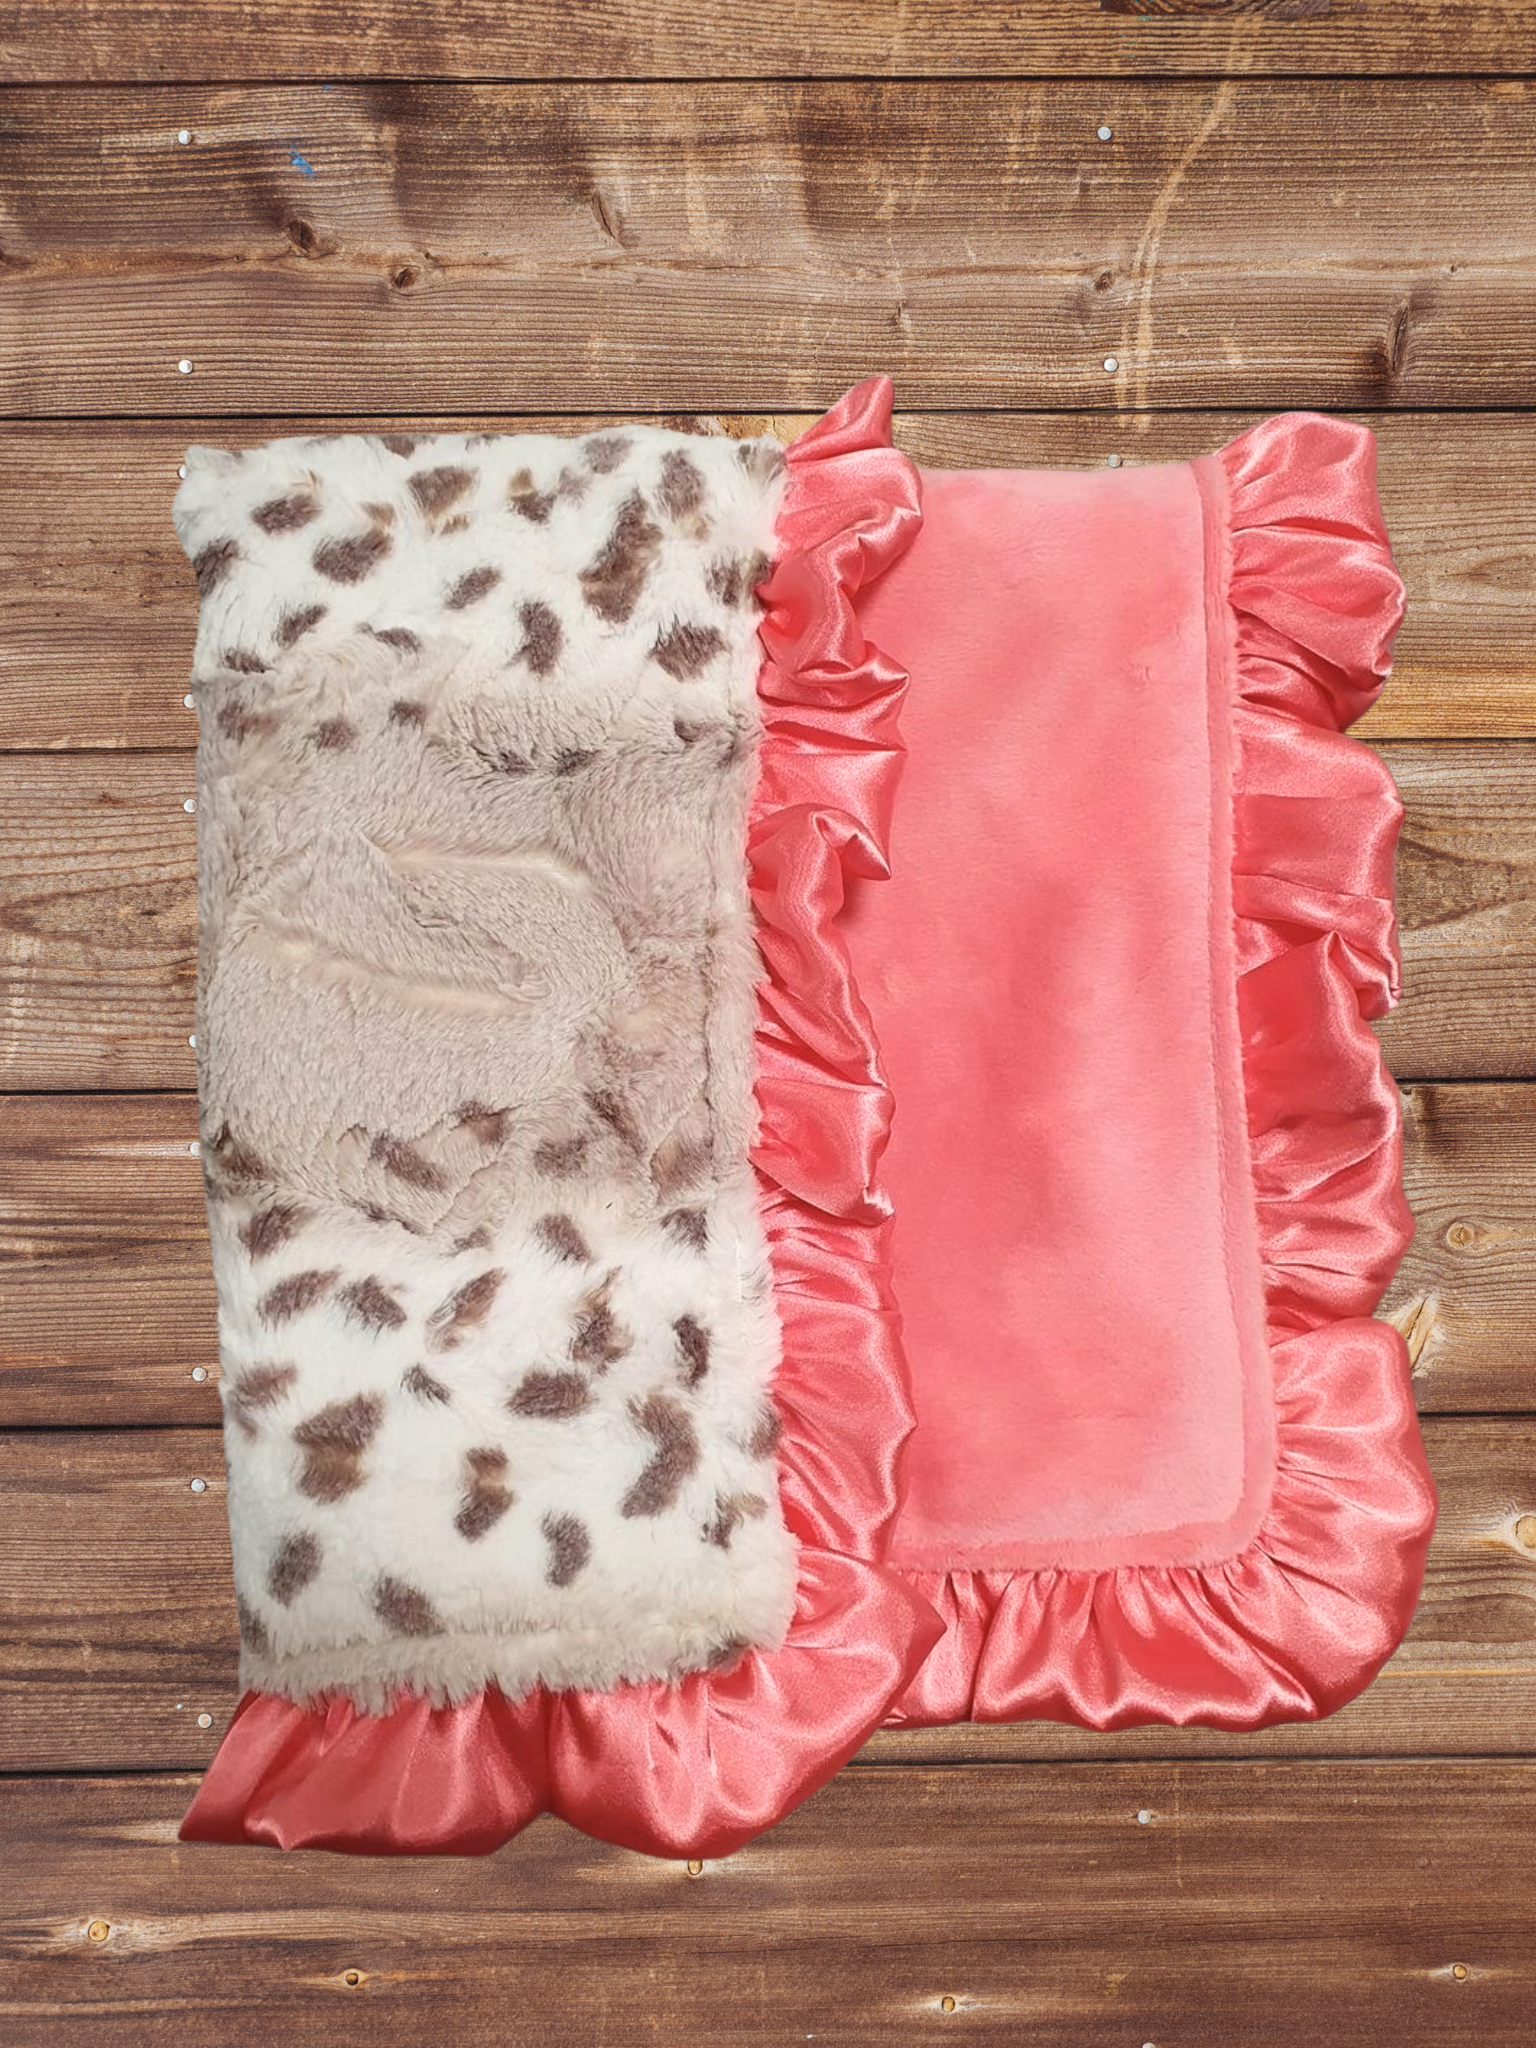 Baby Ruffle Lovey - Lynx Minky and Coral Satin Ruffle Lovey - DBC Baby Bedding Co 